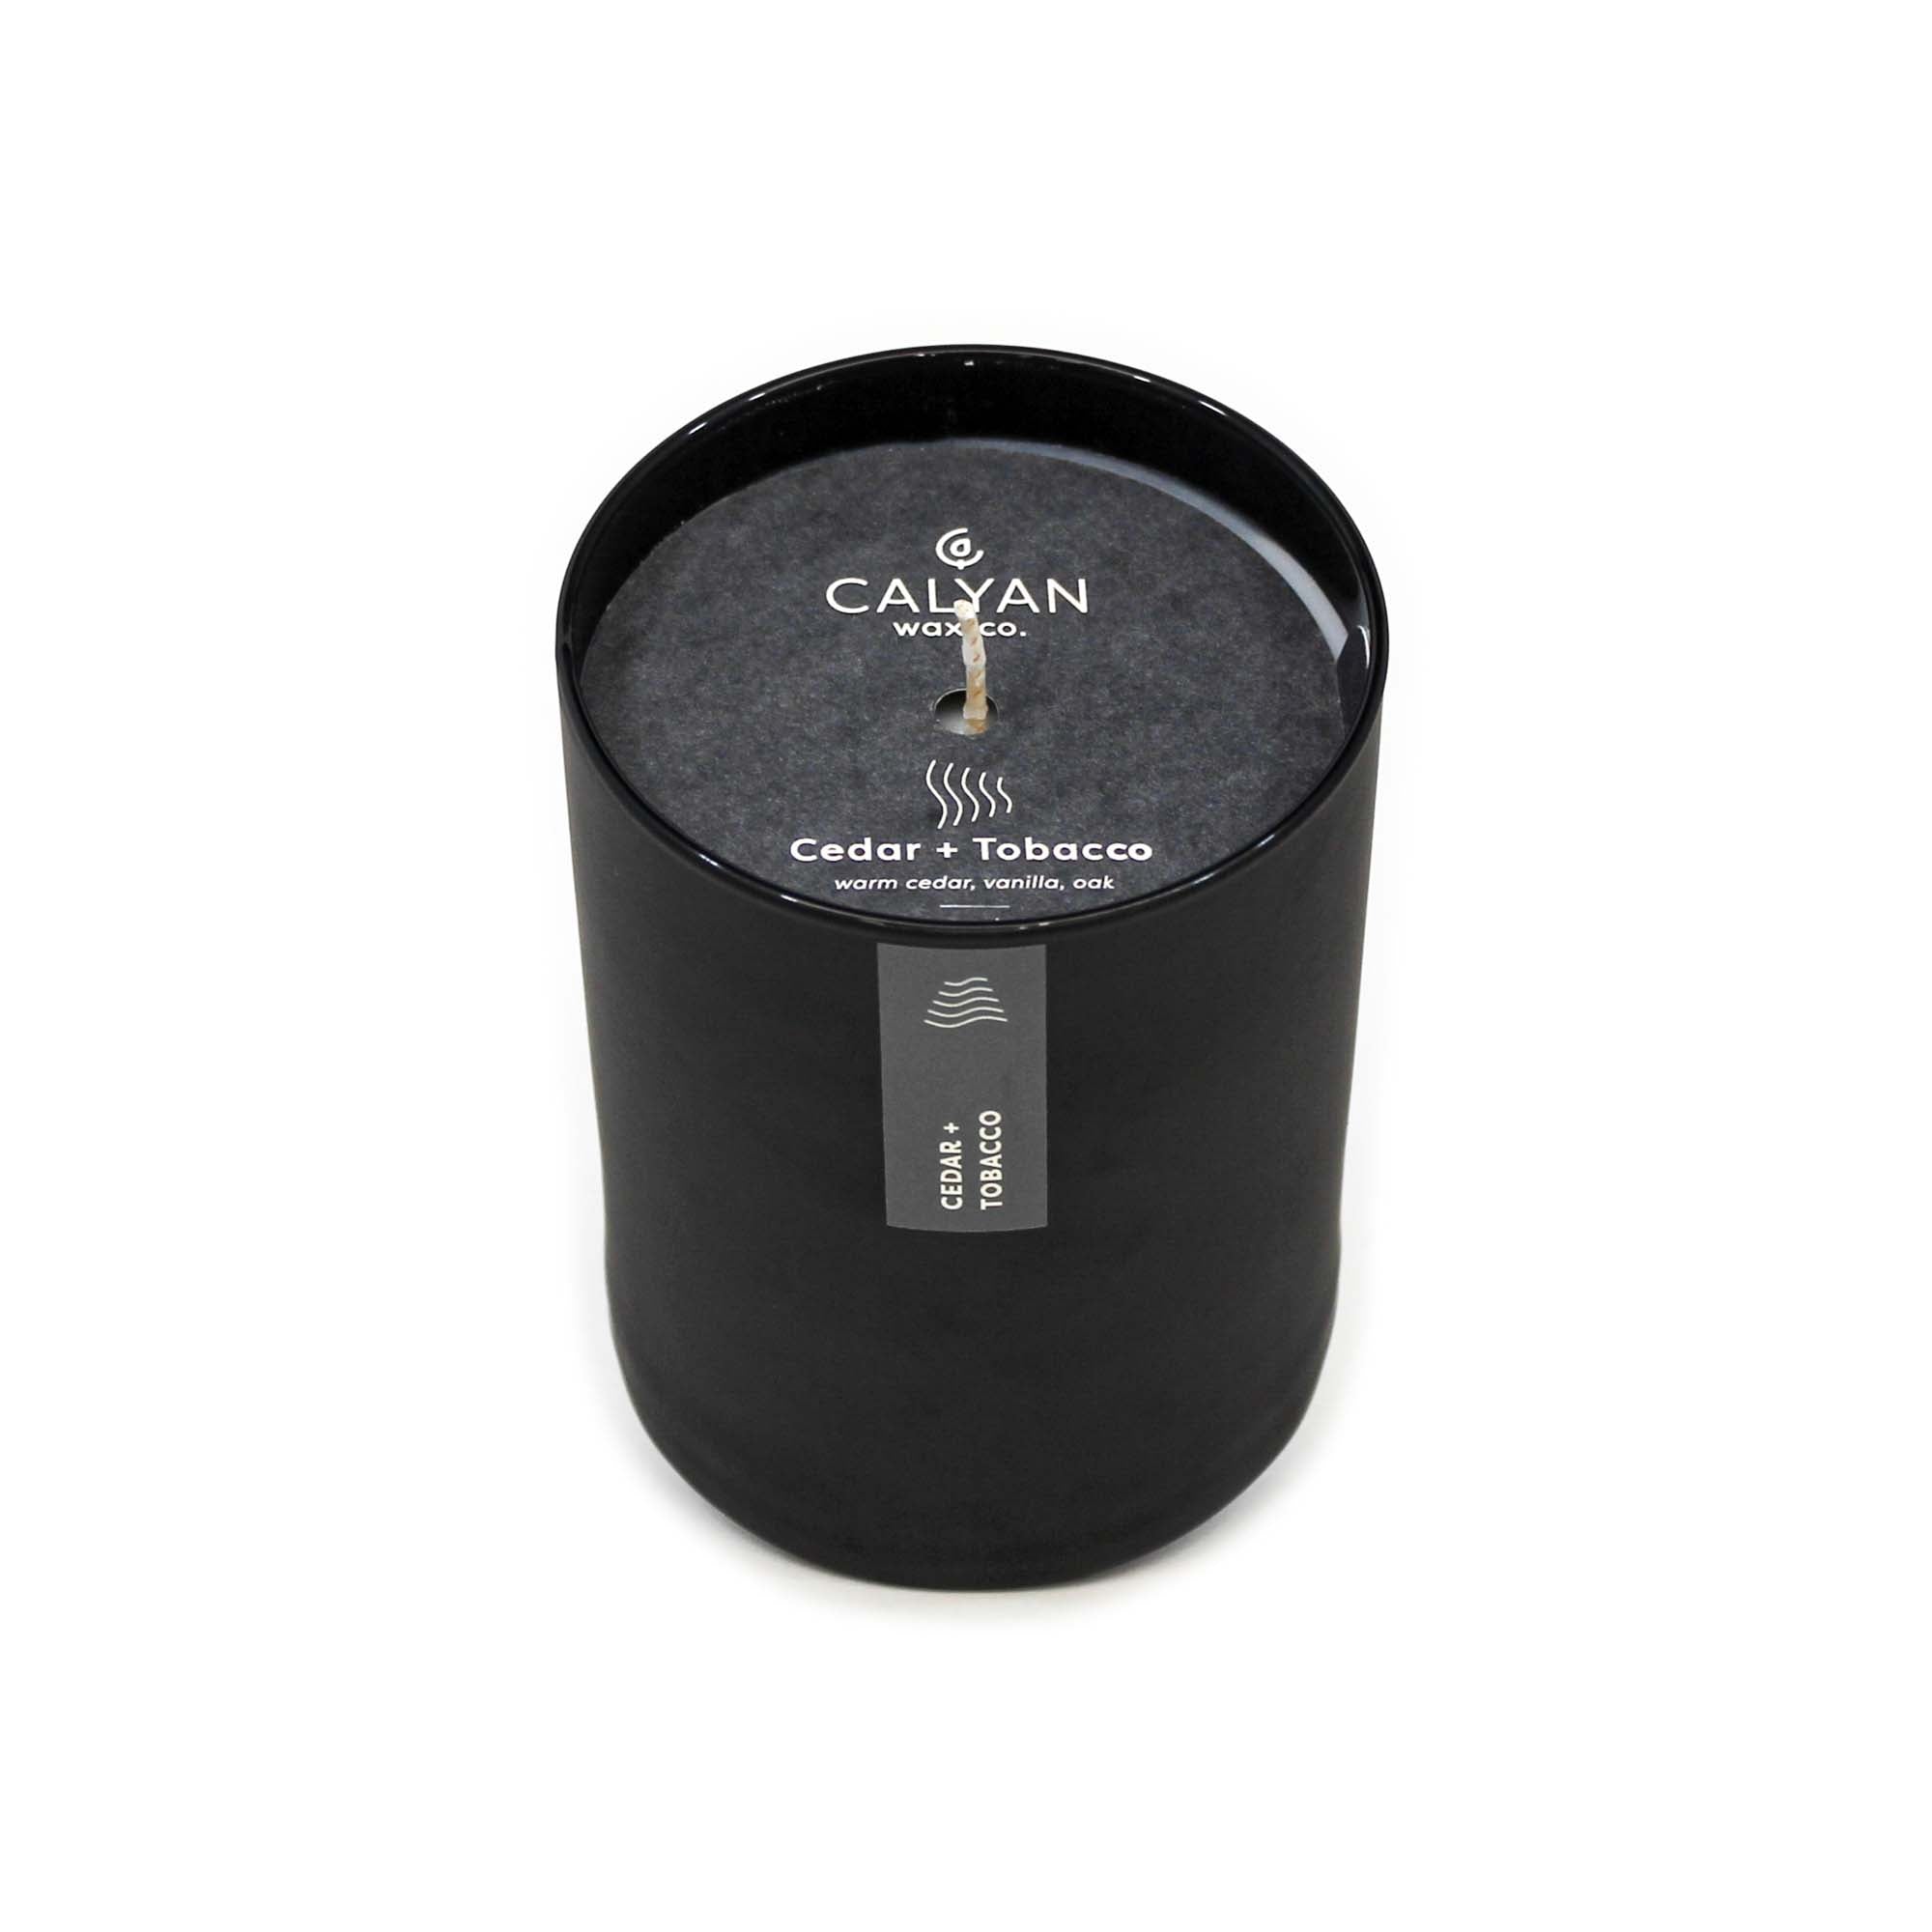 Black matte glass tumbler candle Cedar + Tobacco fragrance from Calyan Wax Company